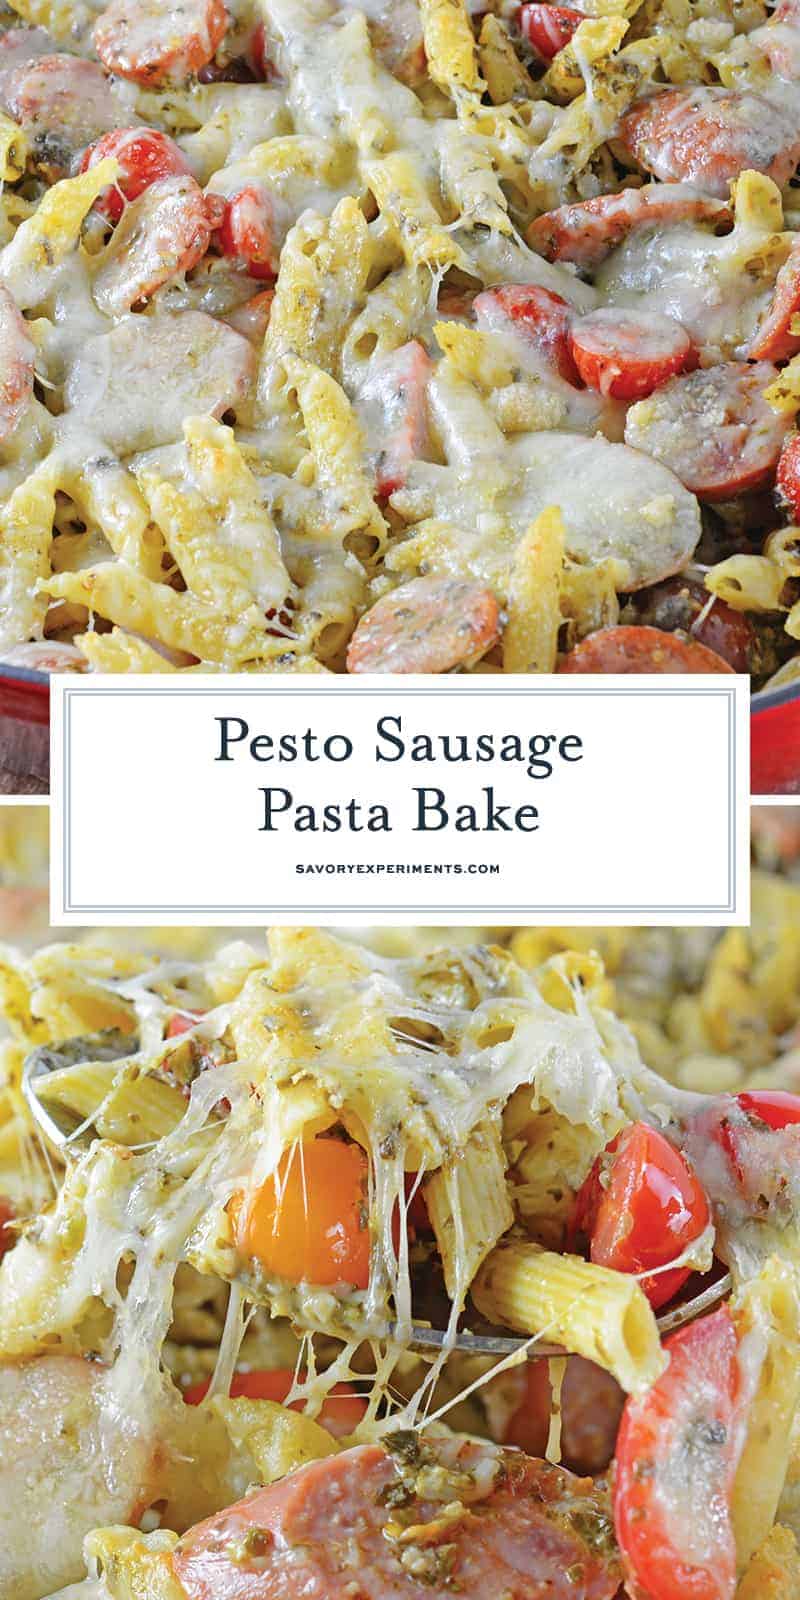 Pesto Sausage Pasta Bake is the perfect easy pasta dish! Creamy pesto sauce, pasta, smoked sausage and Italian cheese make this the ideal meal! #pastabake #bakedpastadishes #sausagepastabake www.savoryexperiments.com